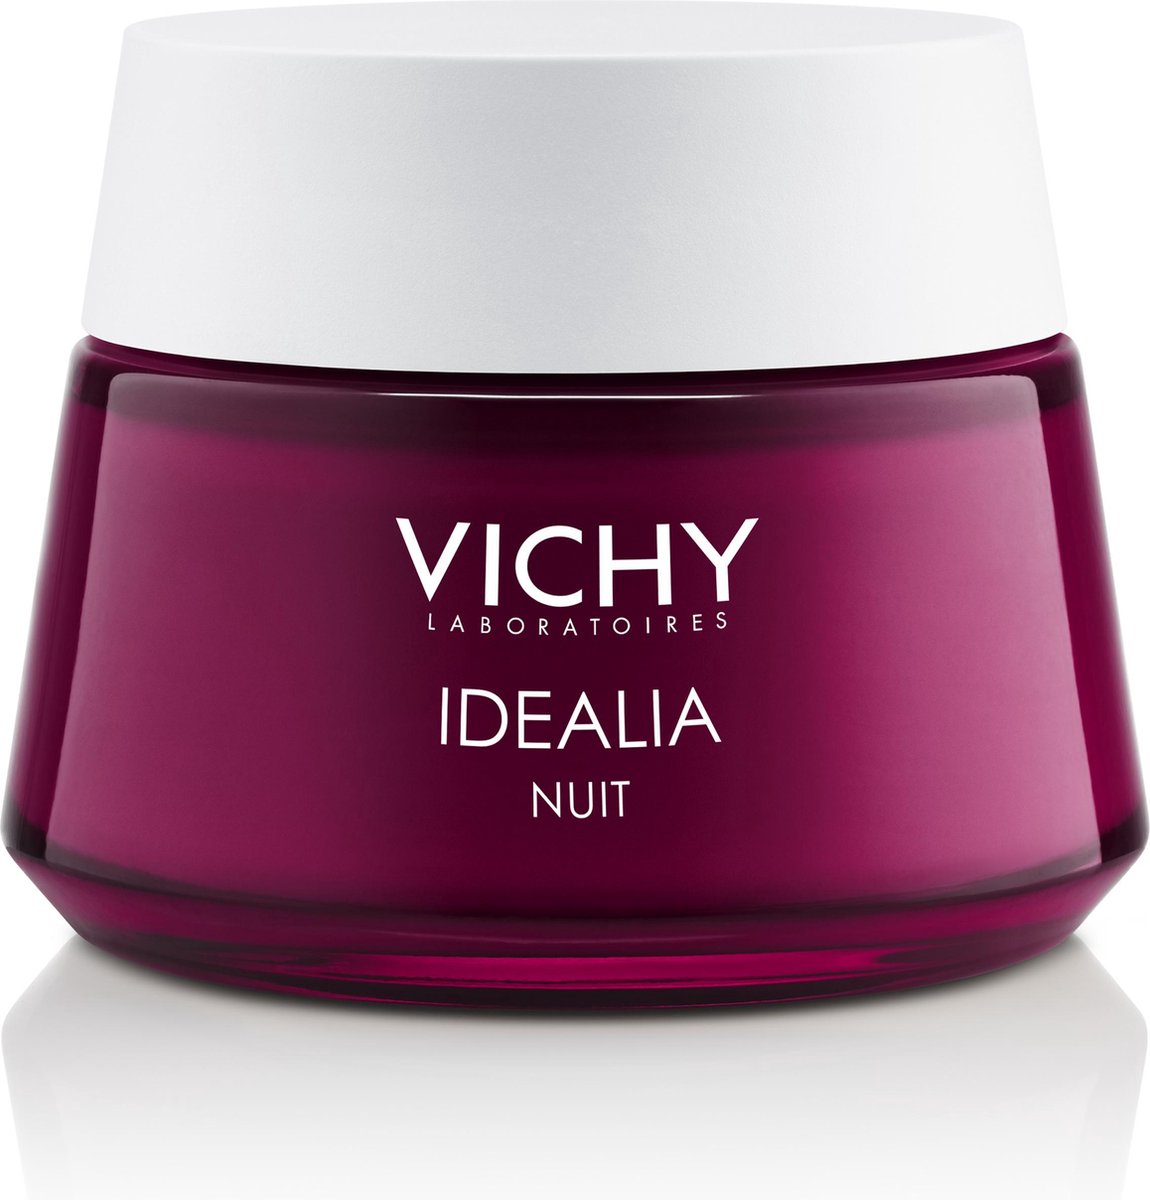 Vichy Idealia Nacht - 50ml